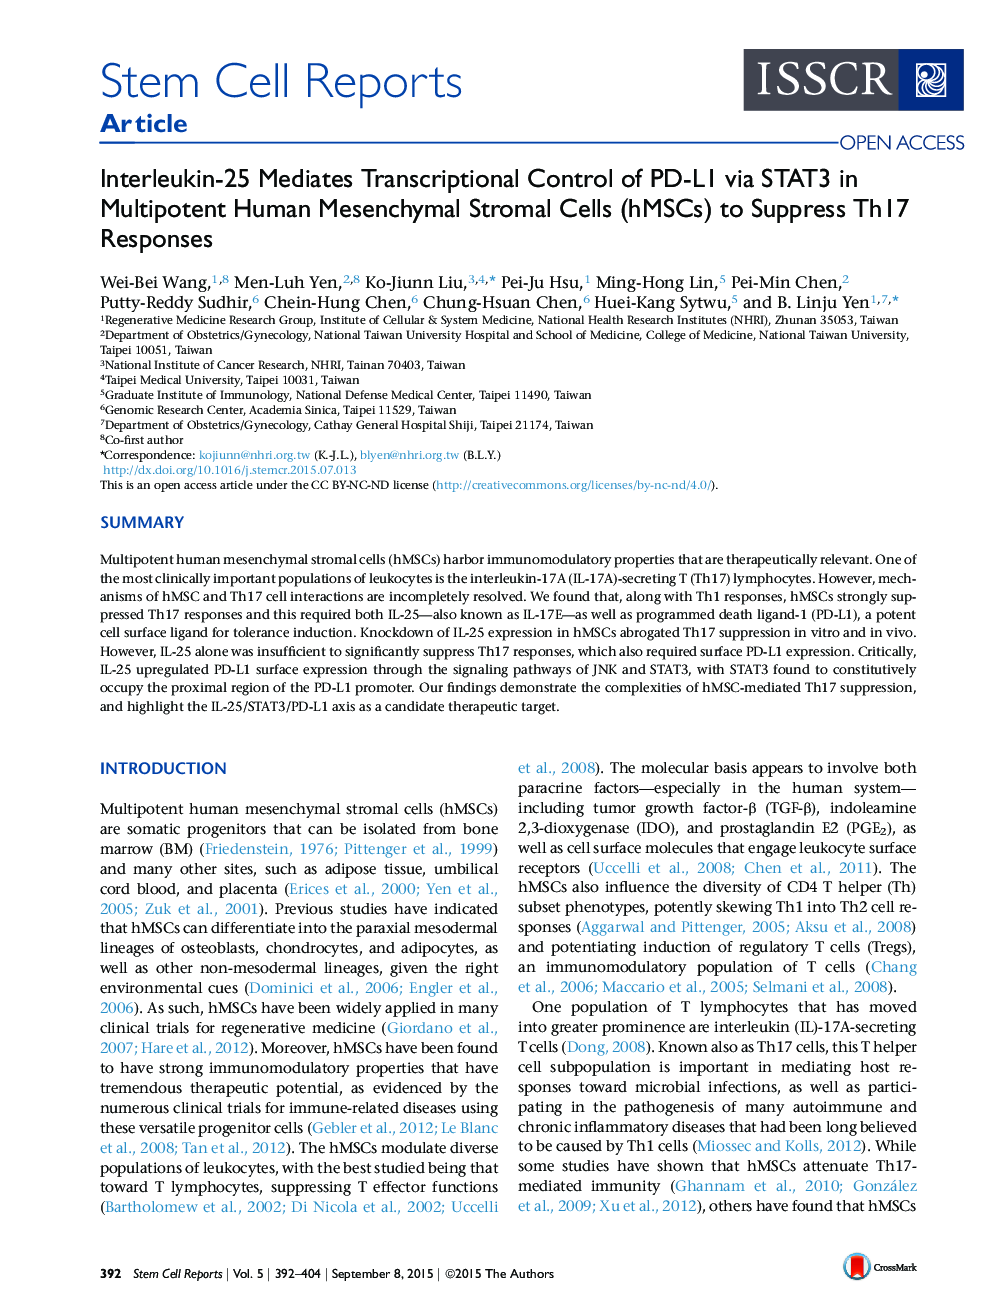 Interleukin-25 Mediates Transcriptional Control of PD-L1 via STAT3 in Multipotent Human Mesenchymal Stromal Cells (hMSCs) to Suppress Th17 Responses 